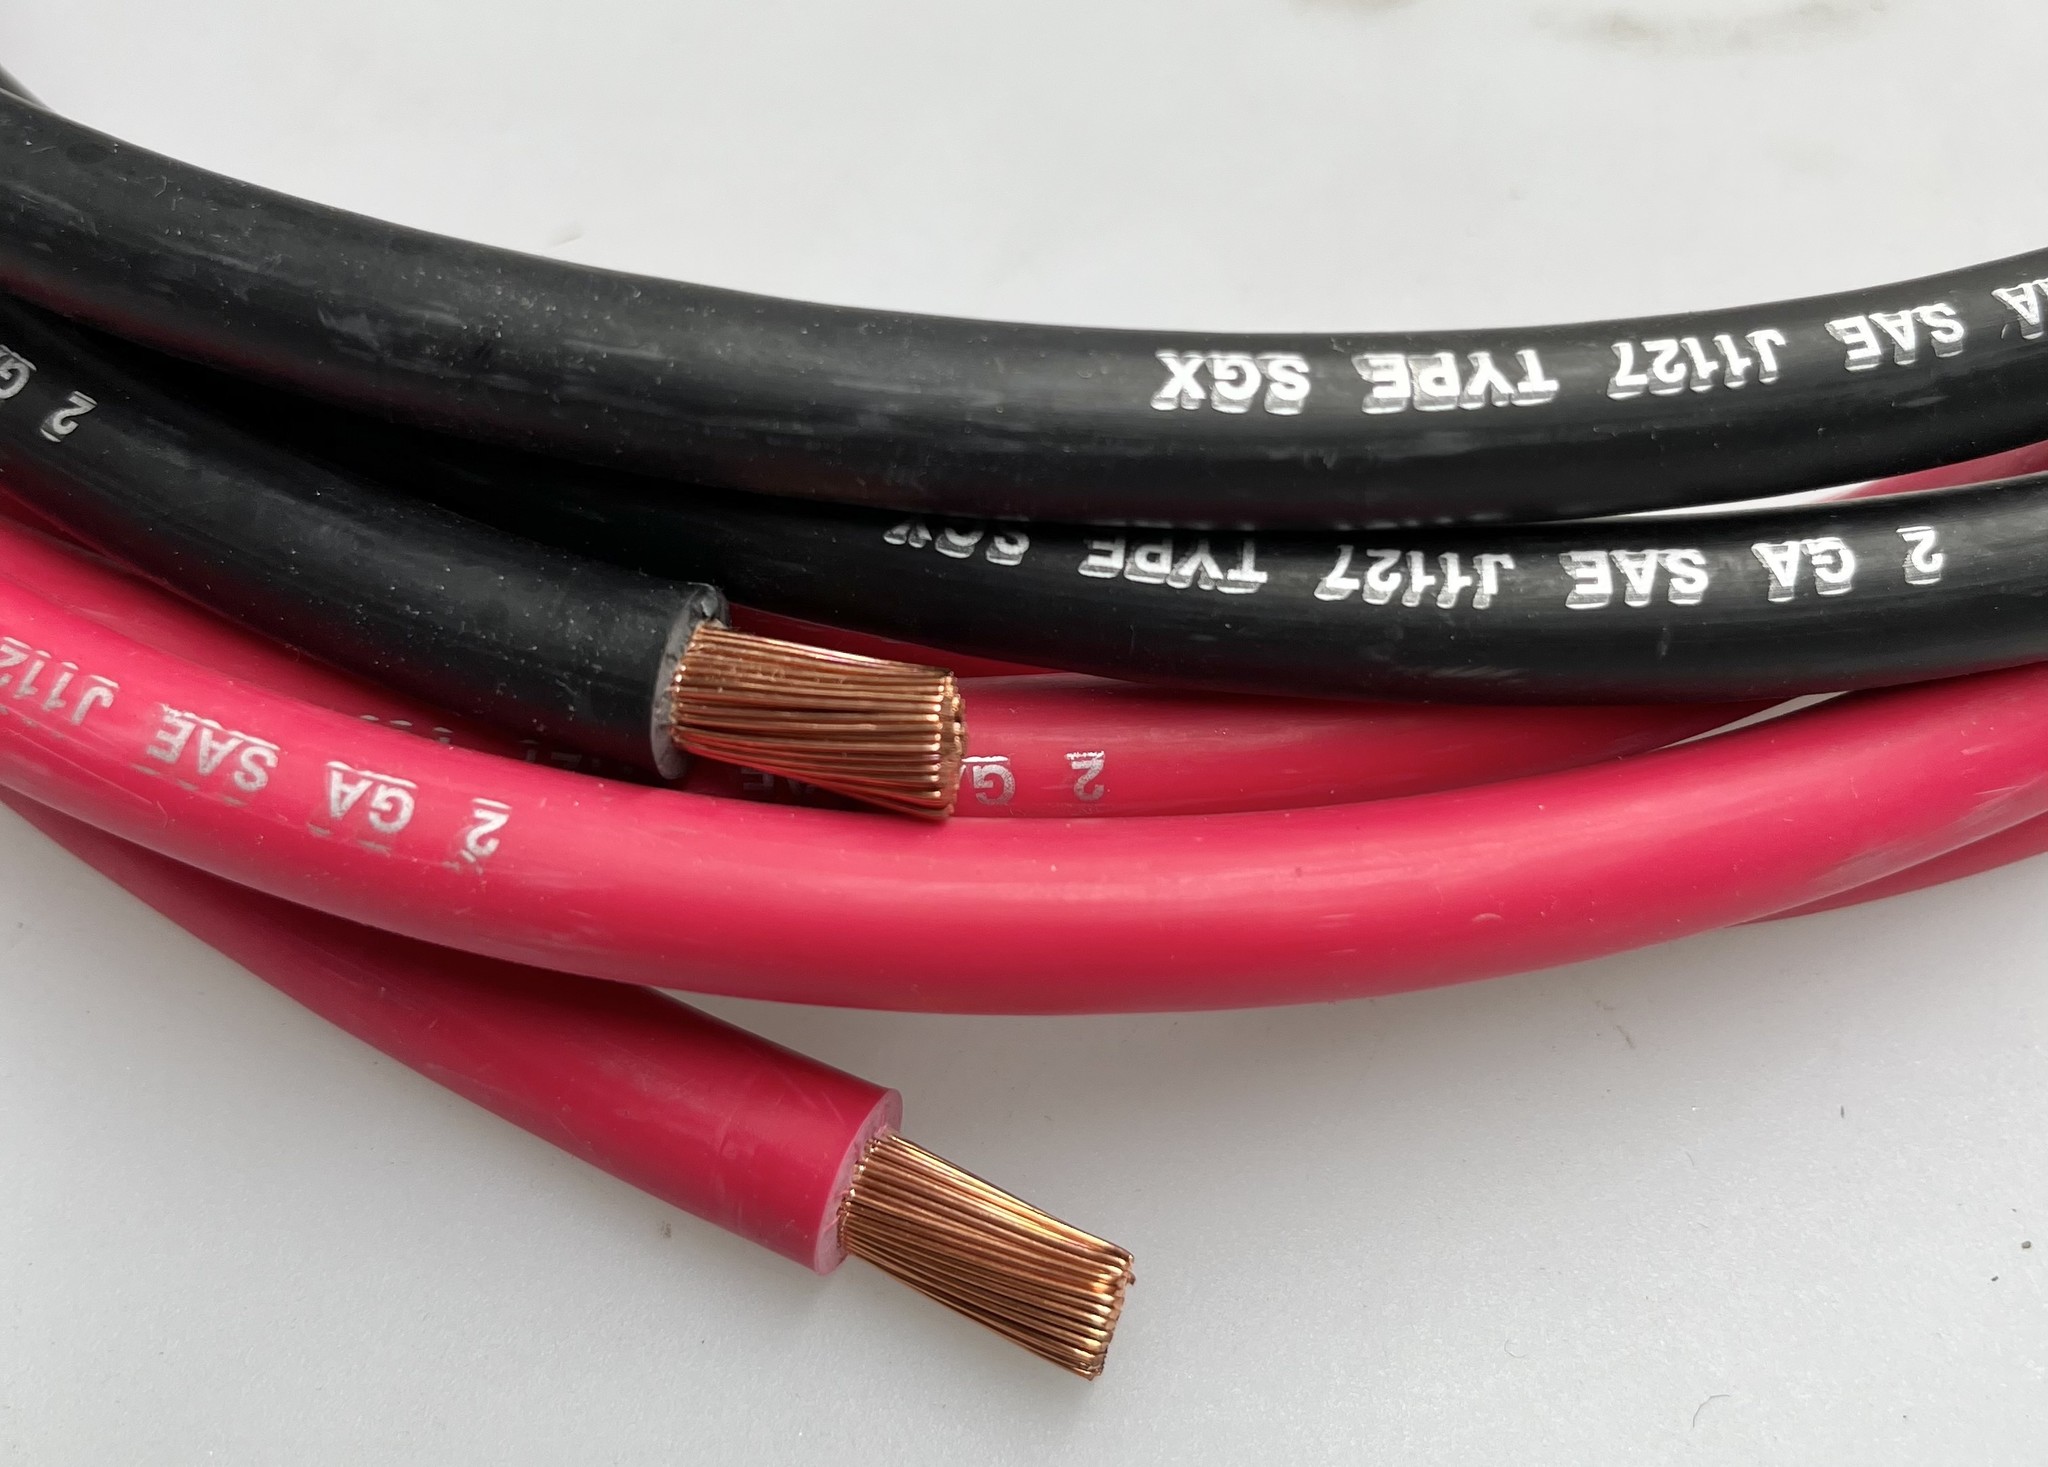 Accu kabel 35mm² rood kopen?  Genius Electrics - Quality inside